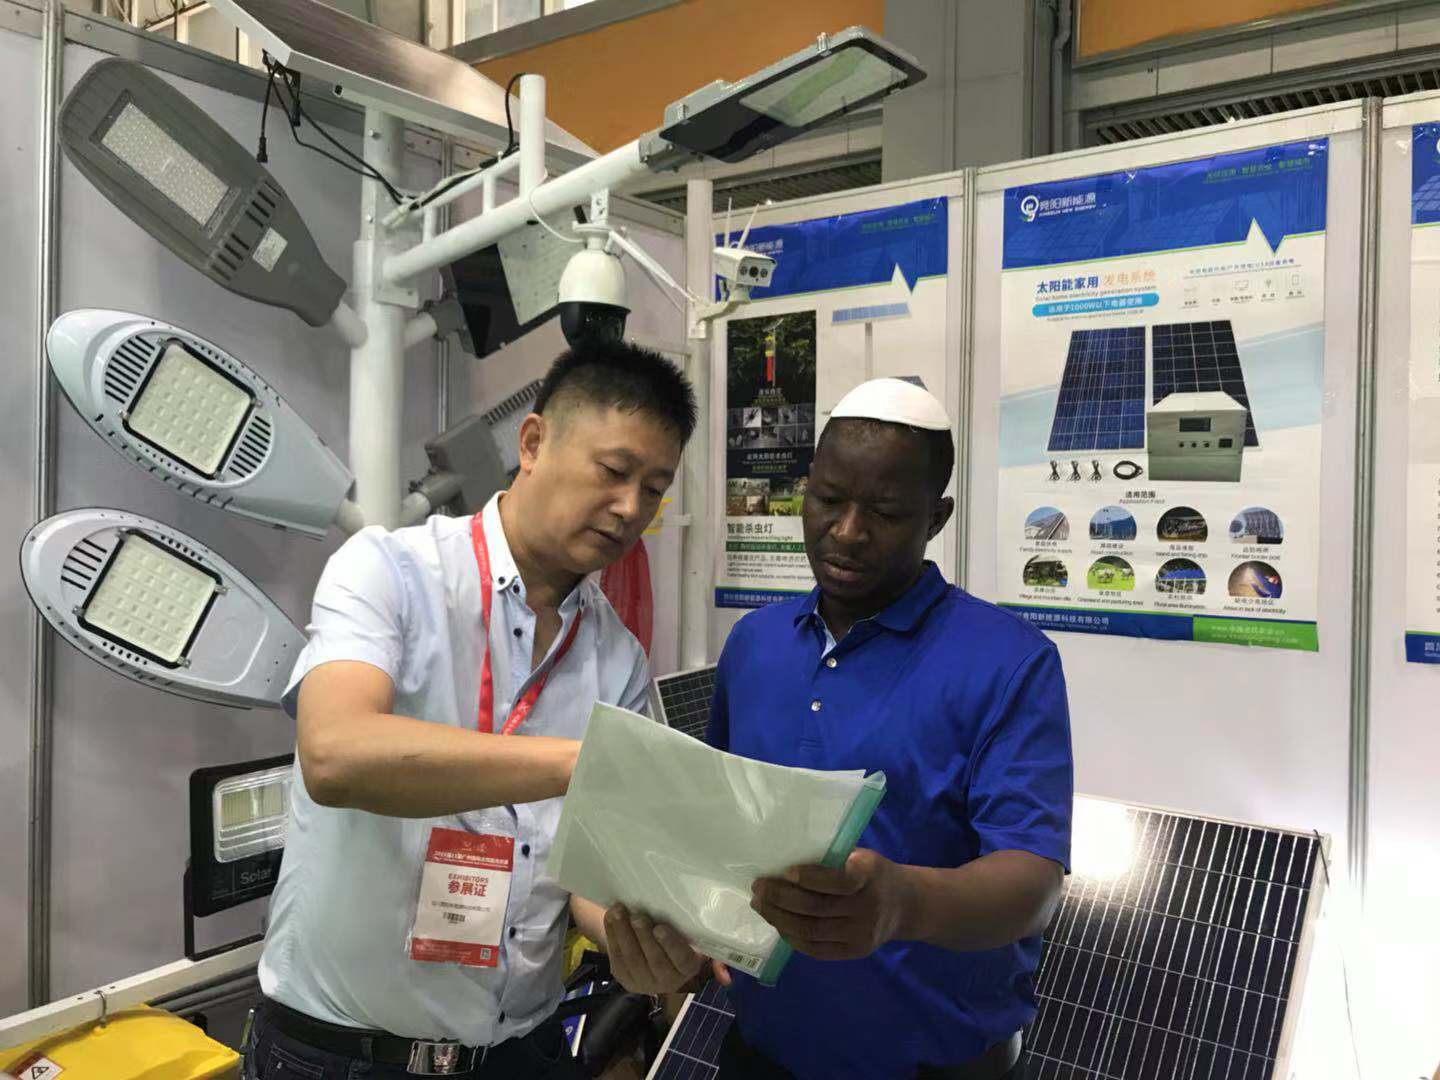 Guangzhou PV Solar Power Exhibition